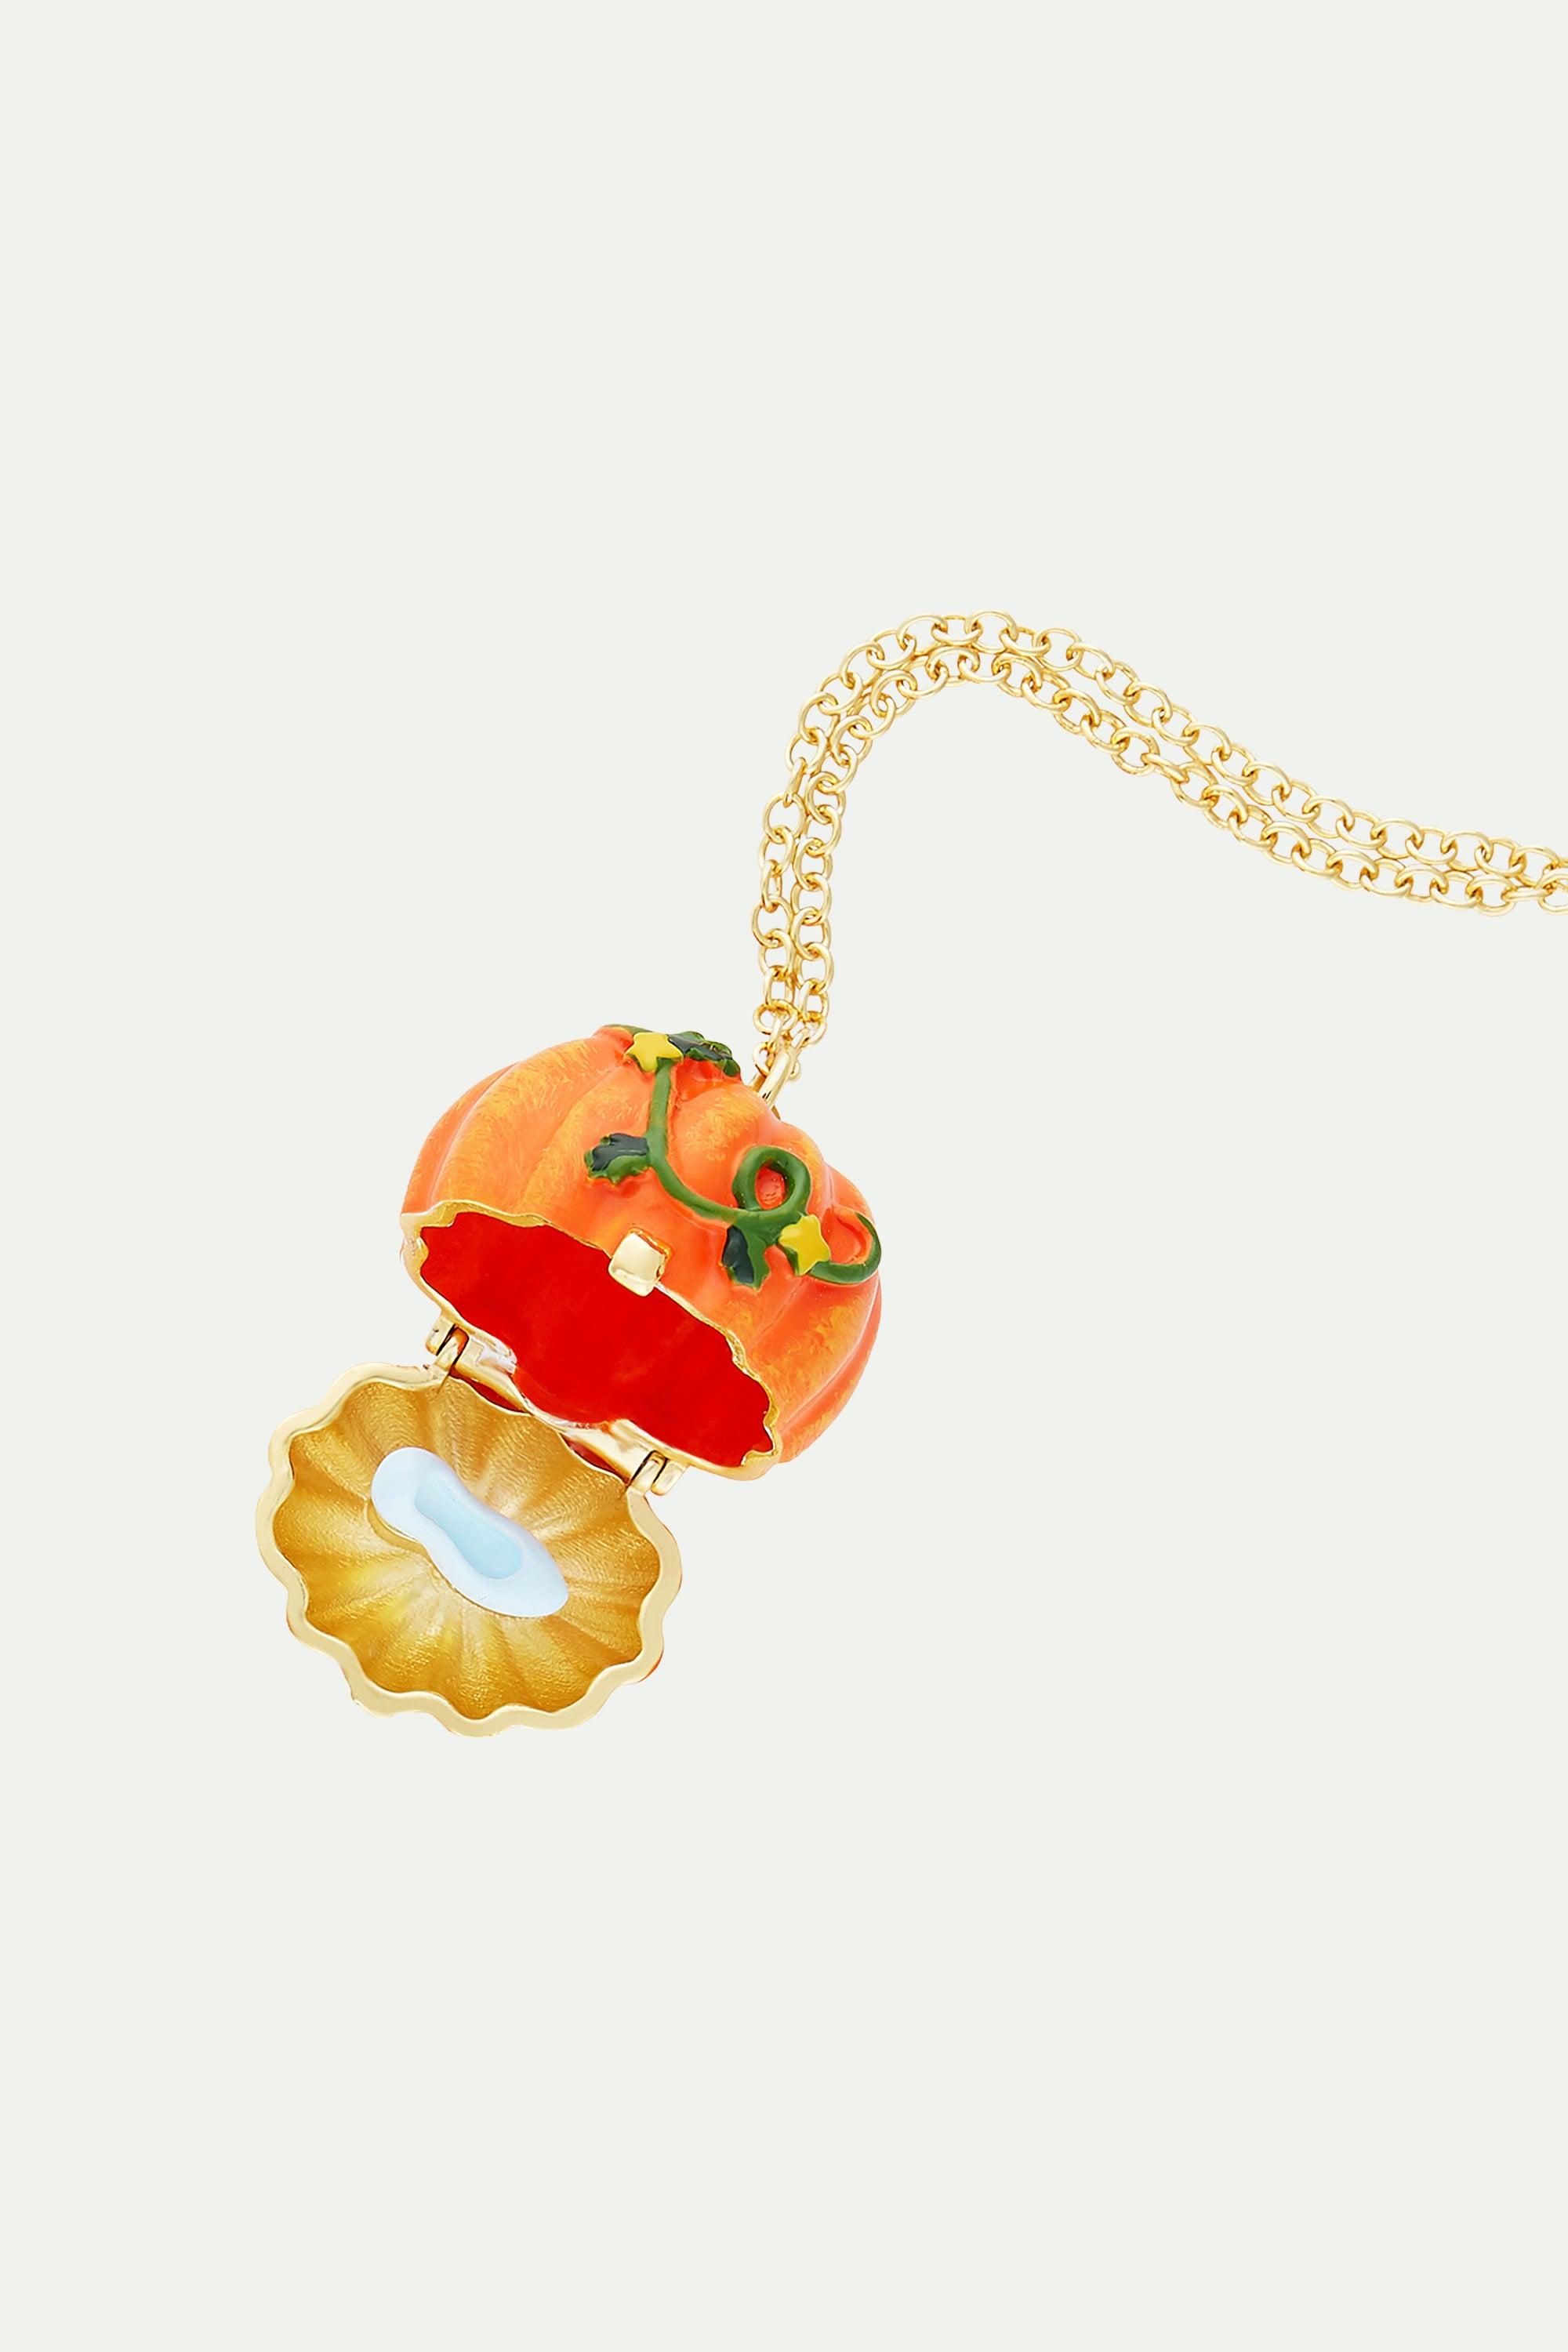 Pumpkin and Slipper secret necklace